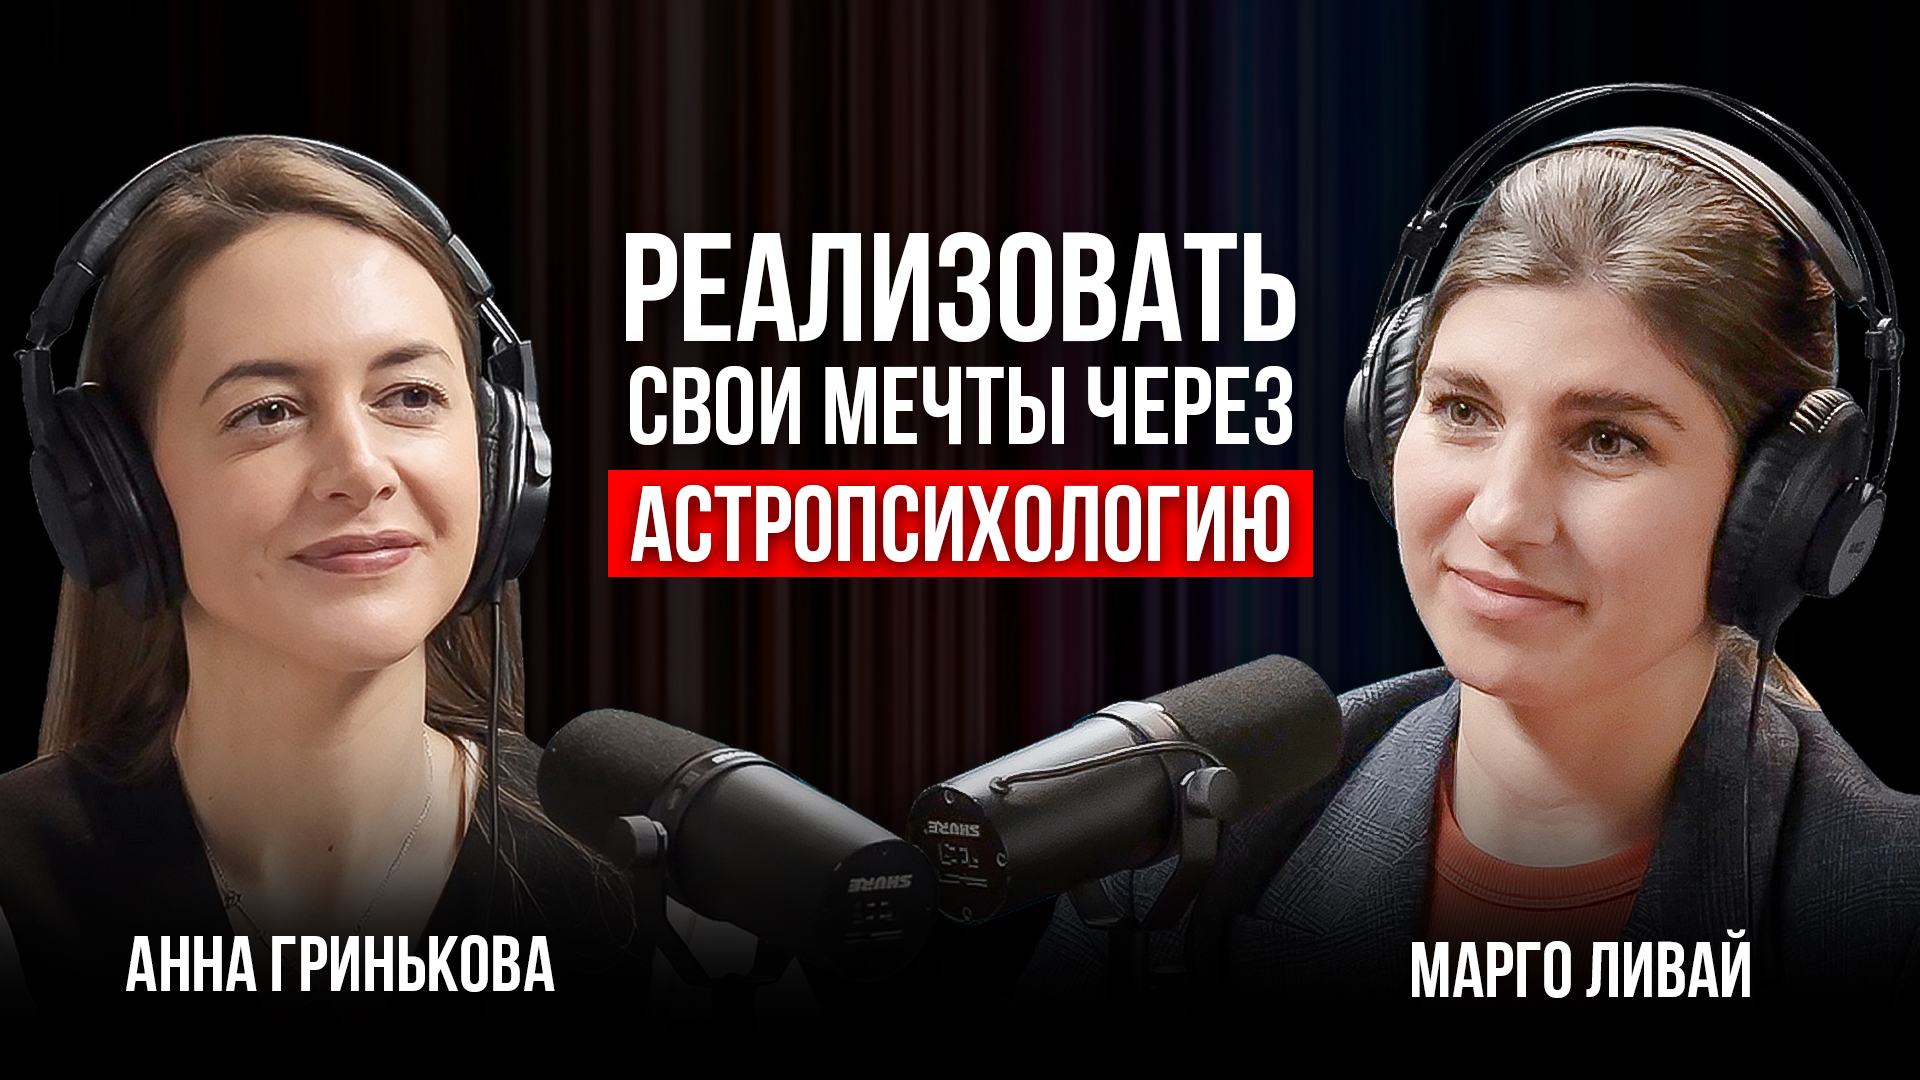 Подкаст с Косенко и 10 млн на рекламу. Анна Гринькова - реализация вашей мечты через астропсихологию